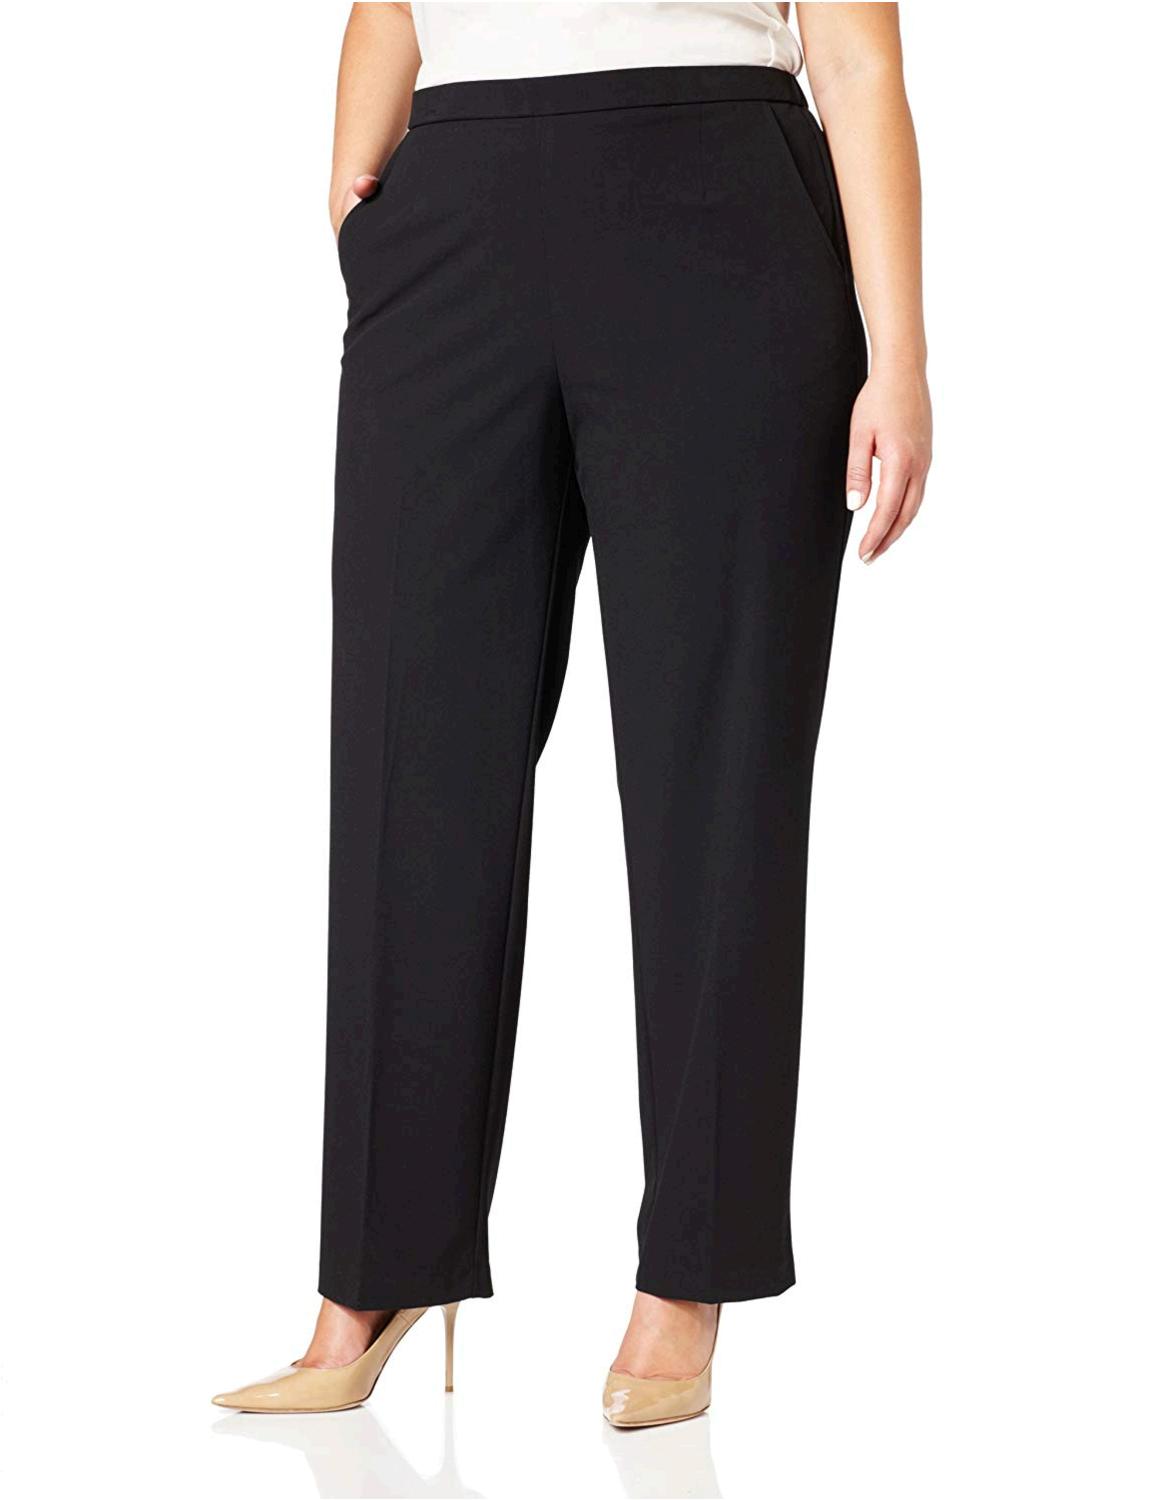 Briggs New York Women's Plus-Size All Around Comfort Pant,, Black, Size ...